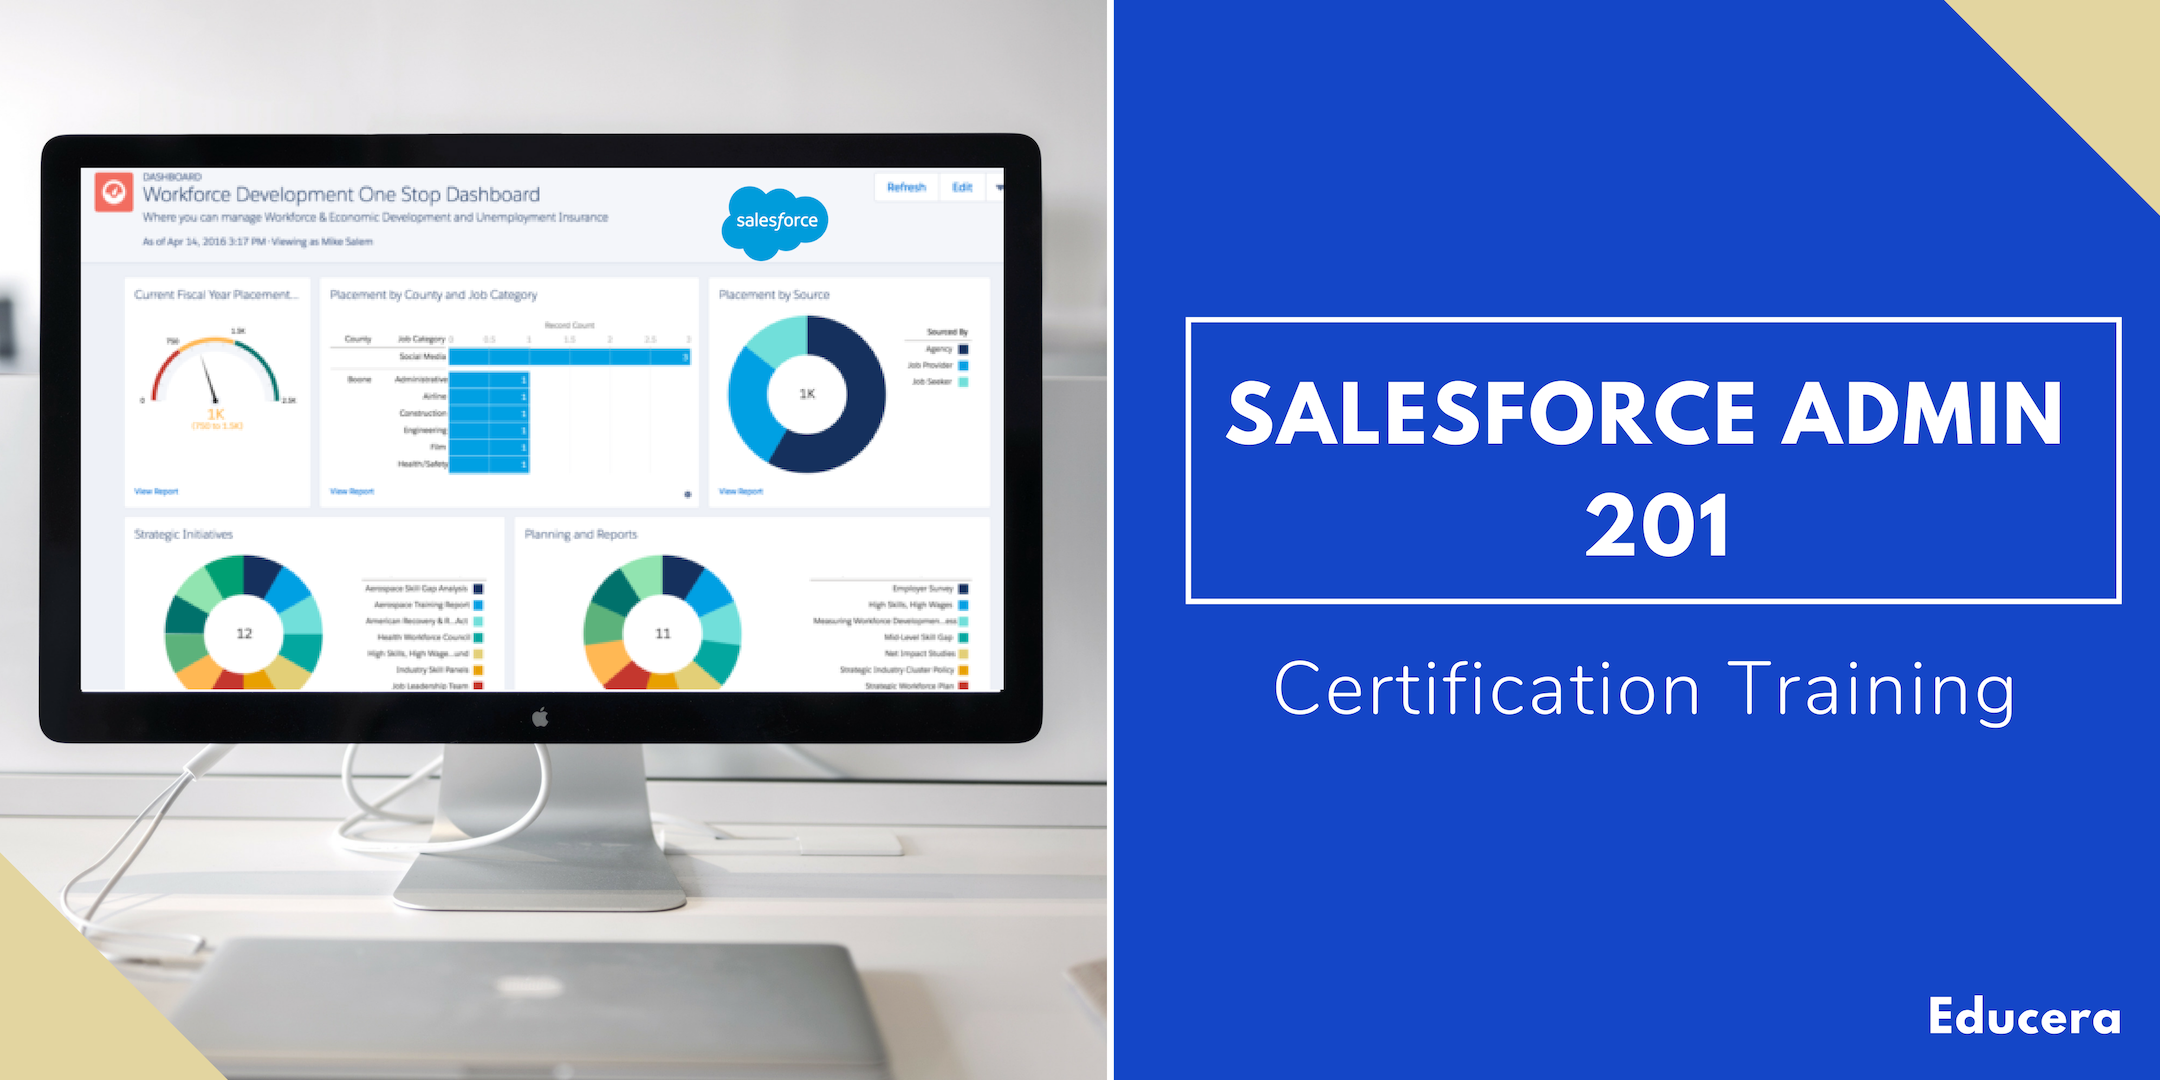 Salesforce Admin 201 & App Builder Certification Training in St. Cloud, MN